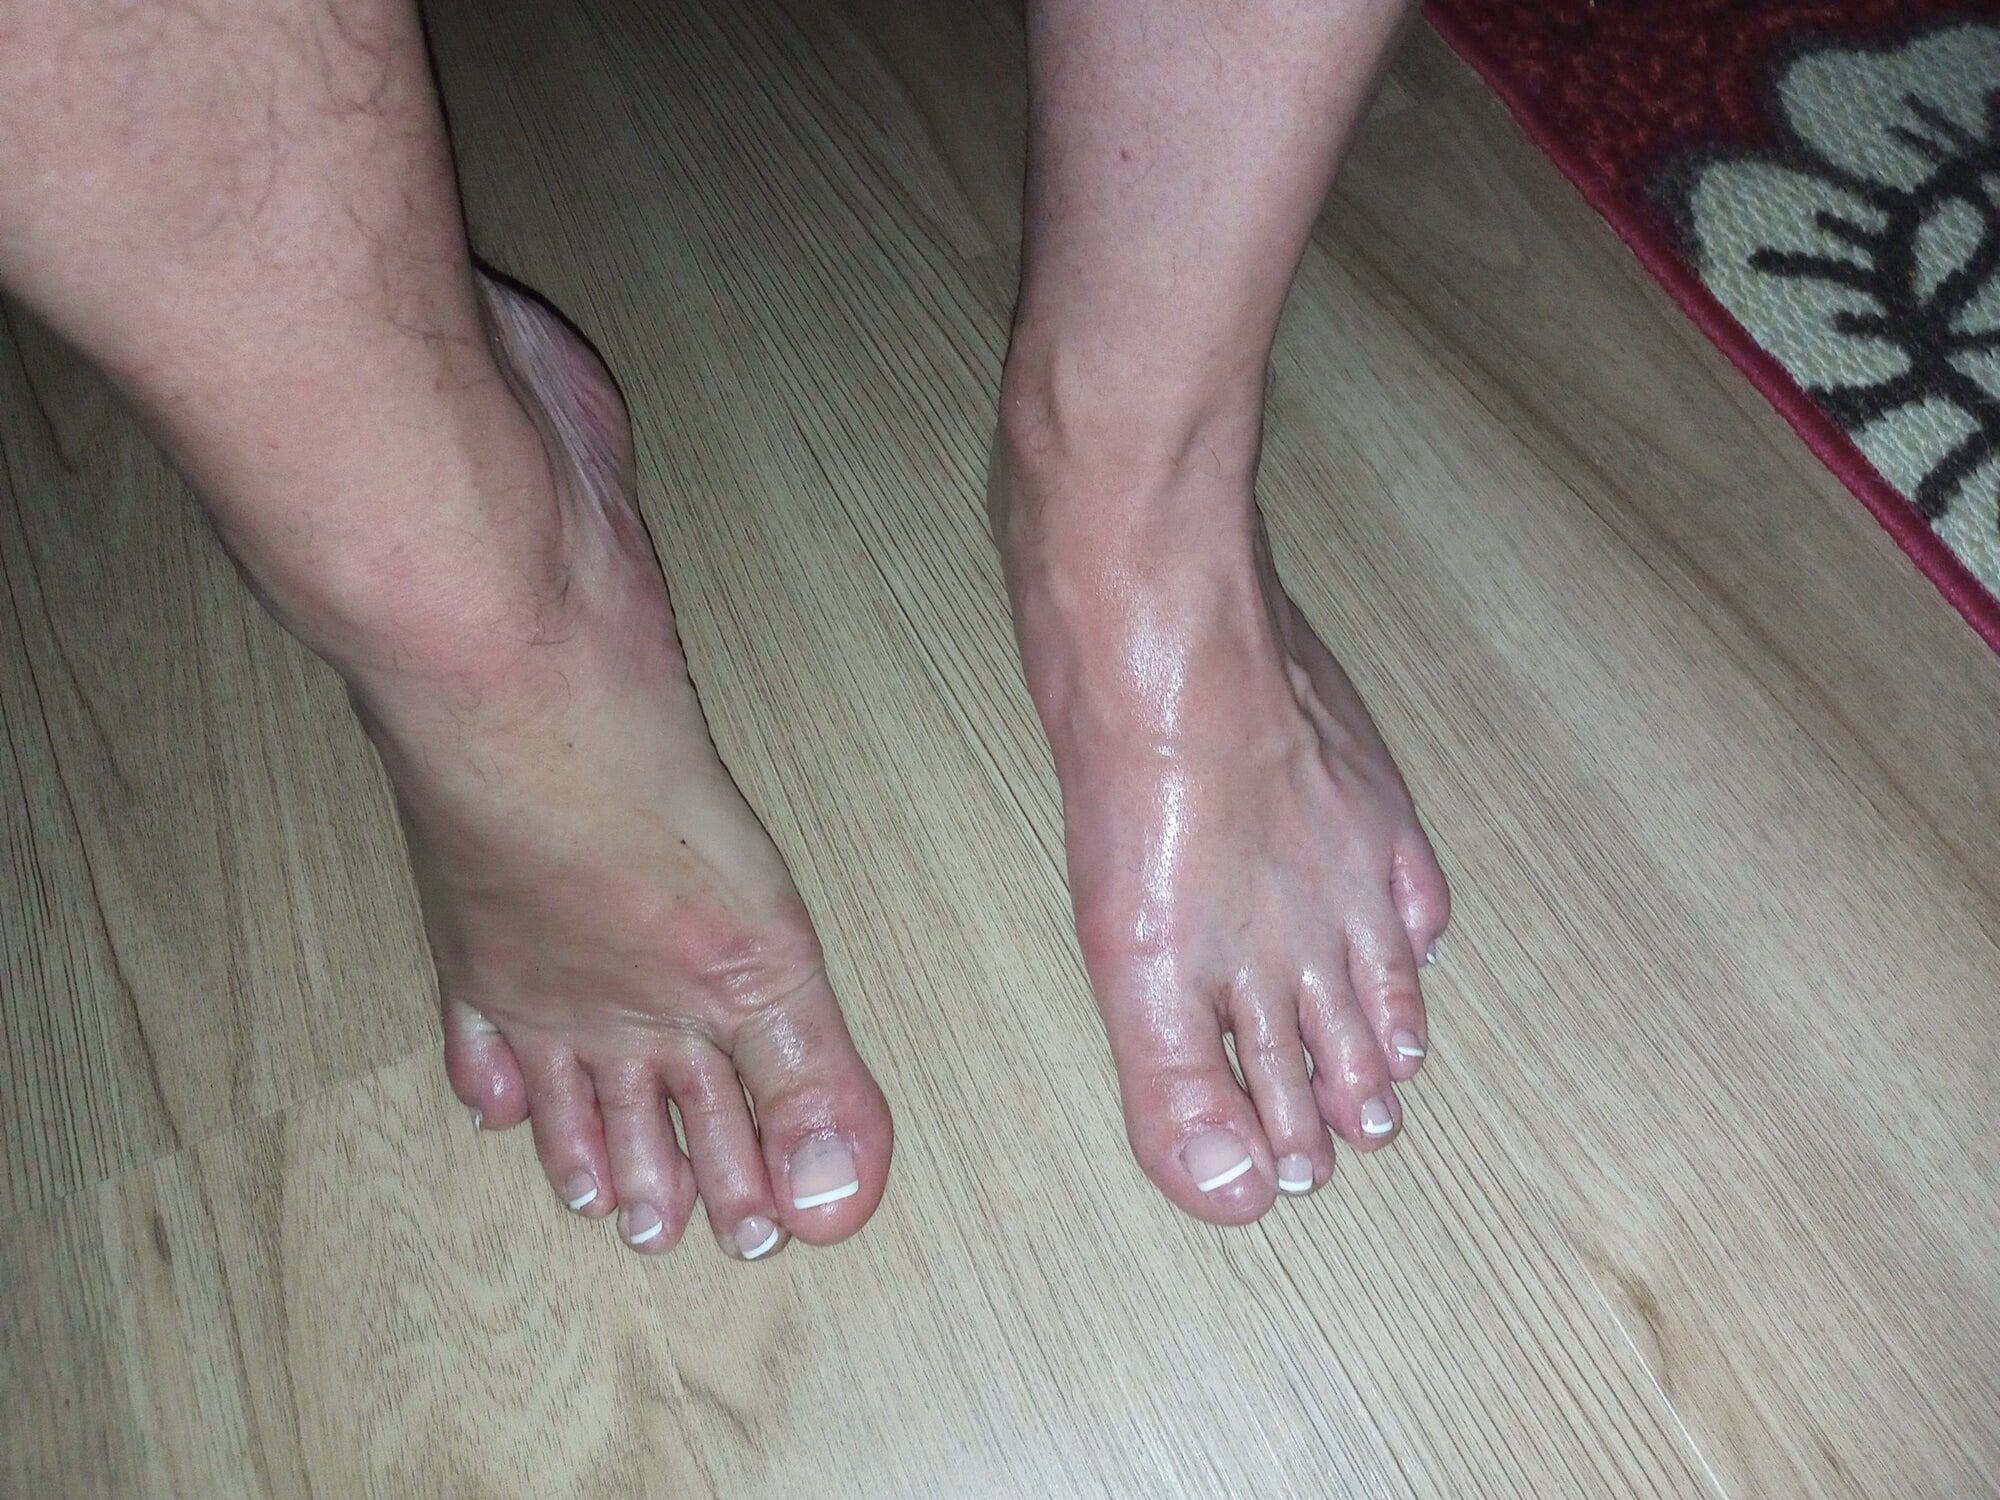 Man feet